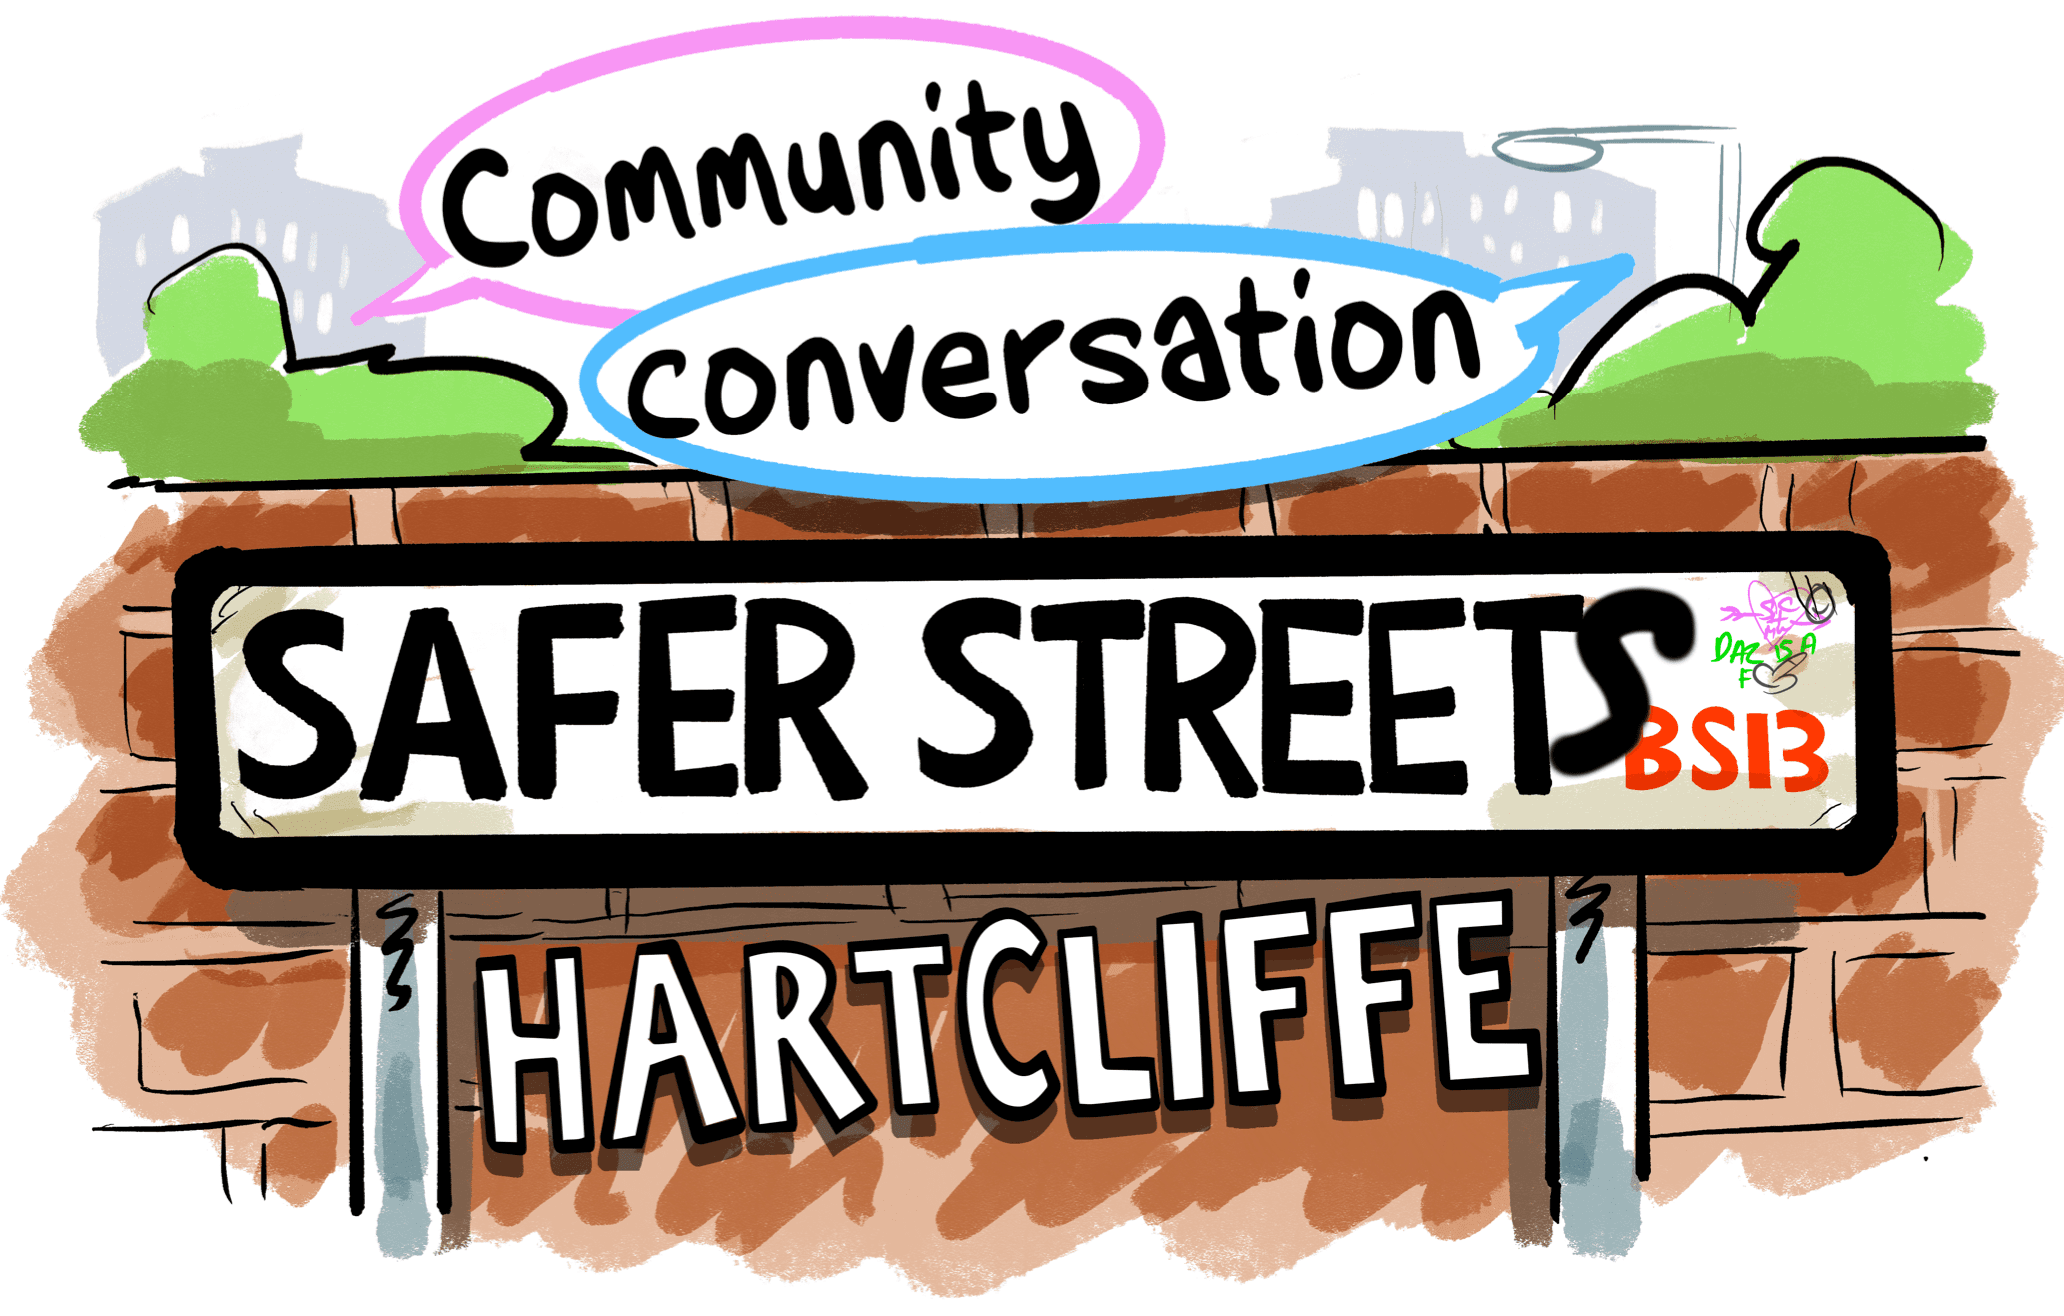 Hartcliffe Safer Streets banner